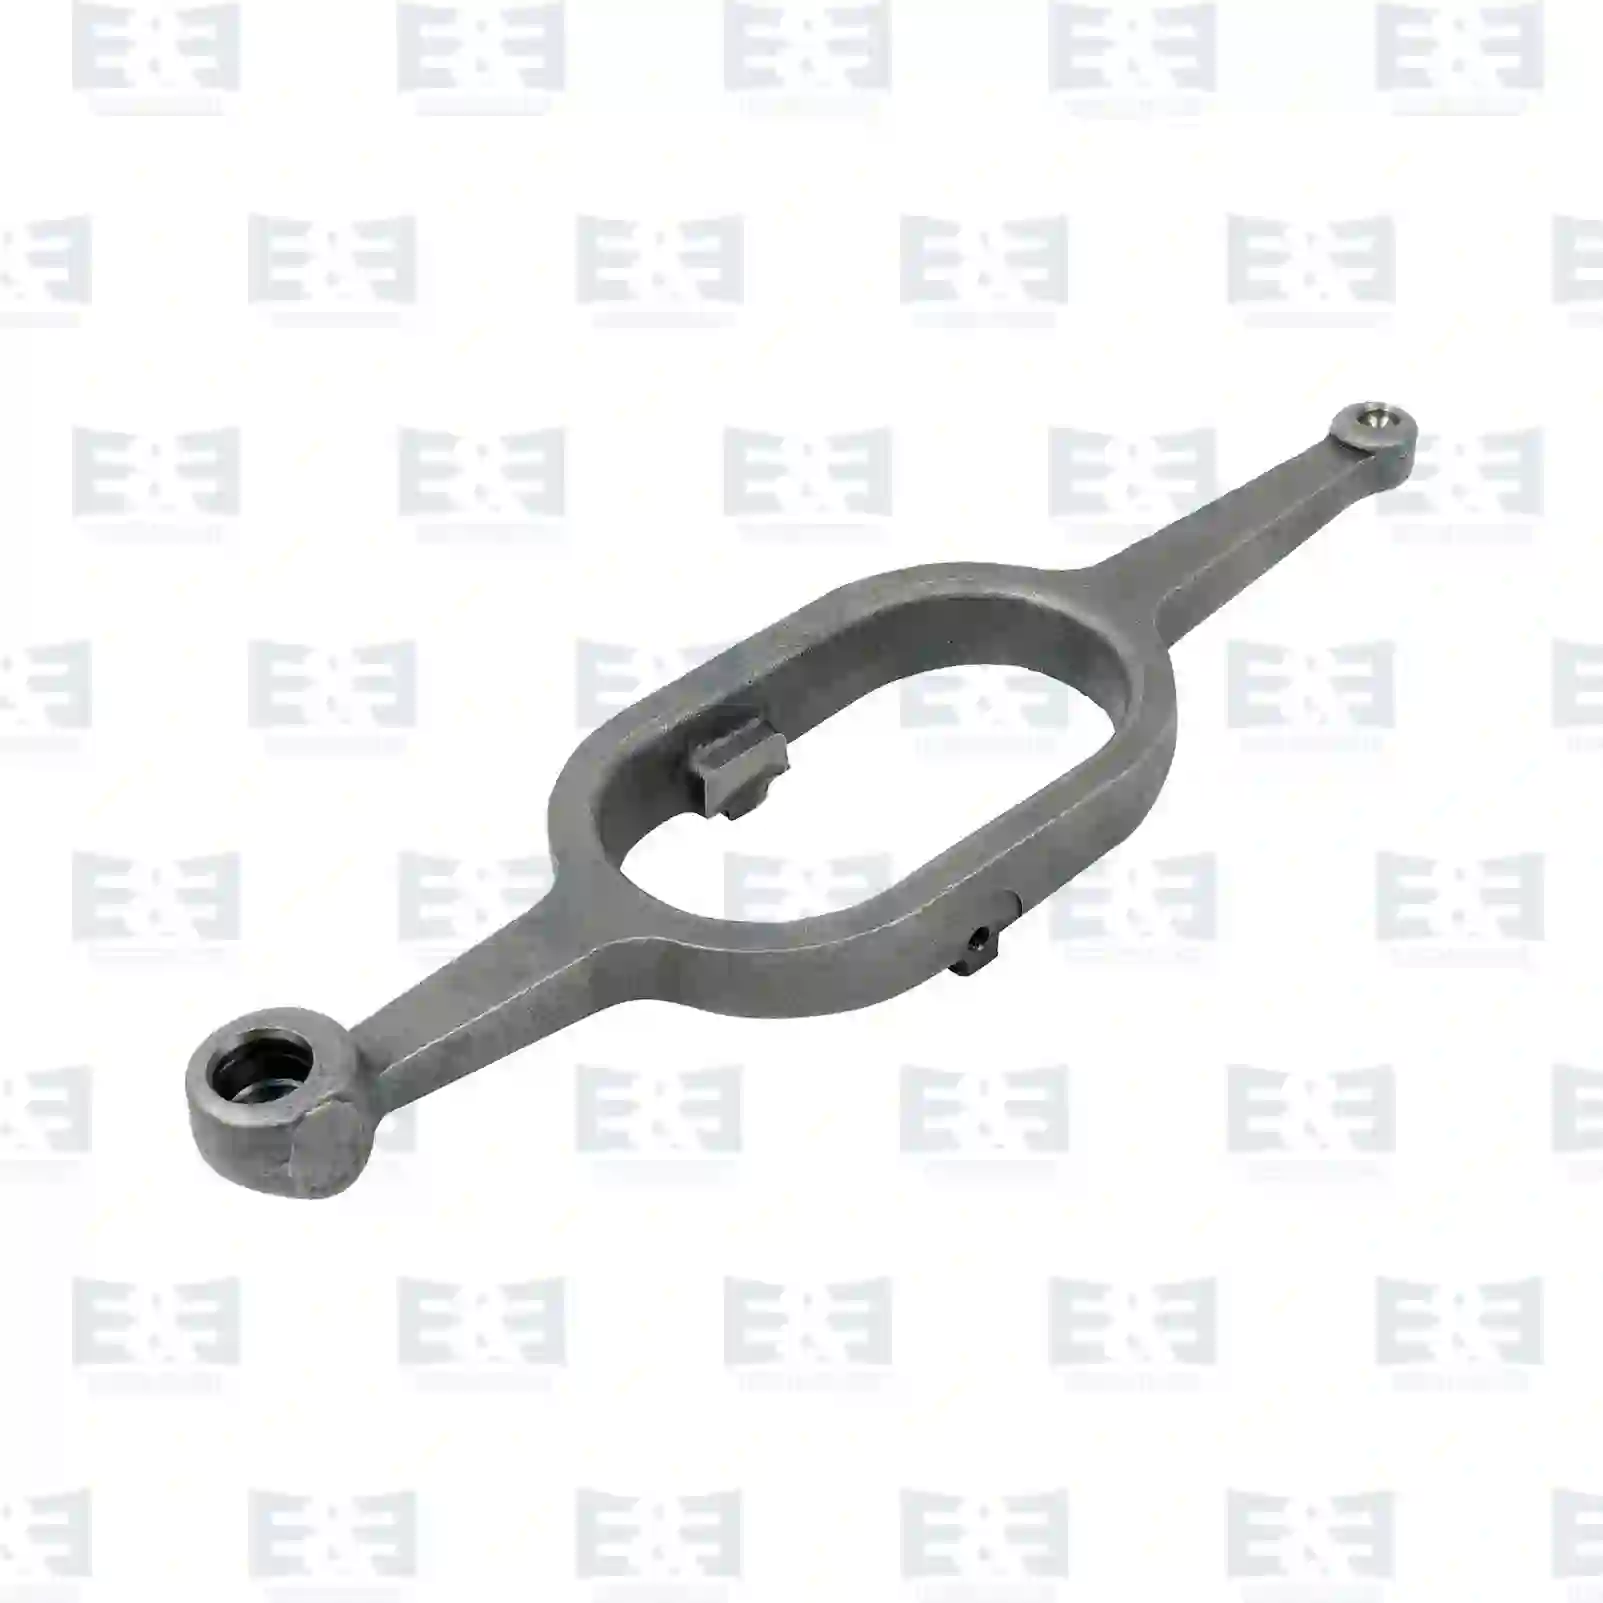  Release lever || E&E Truck Spare Parts | Truck Spare Parts, Auotomotive Spare Parts